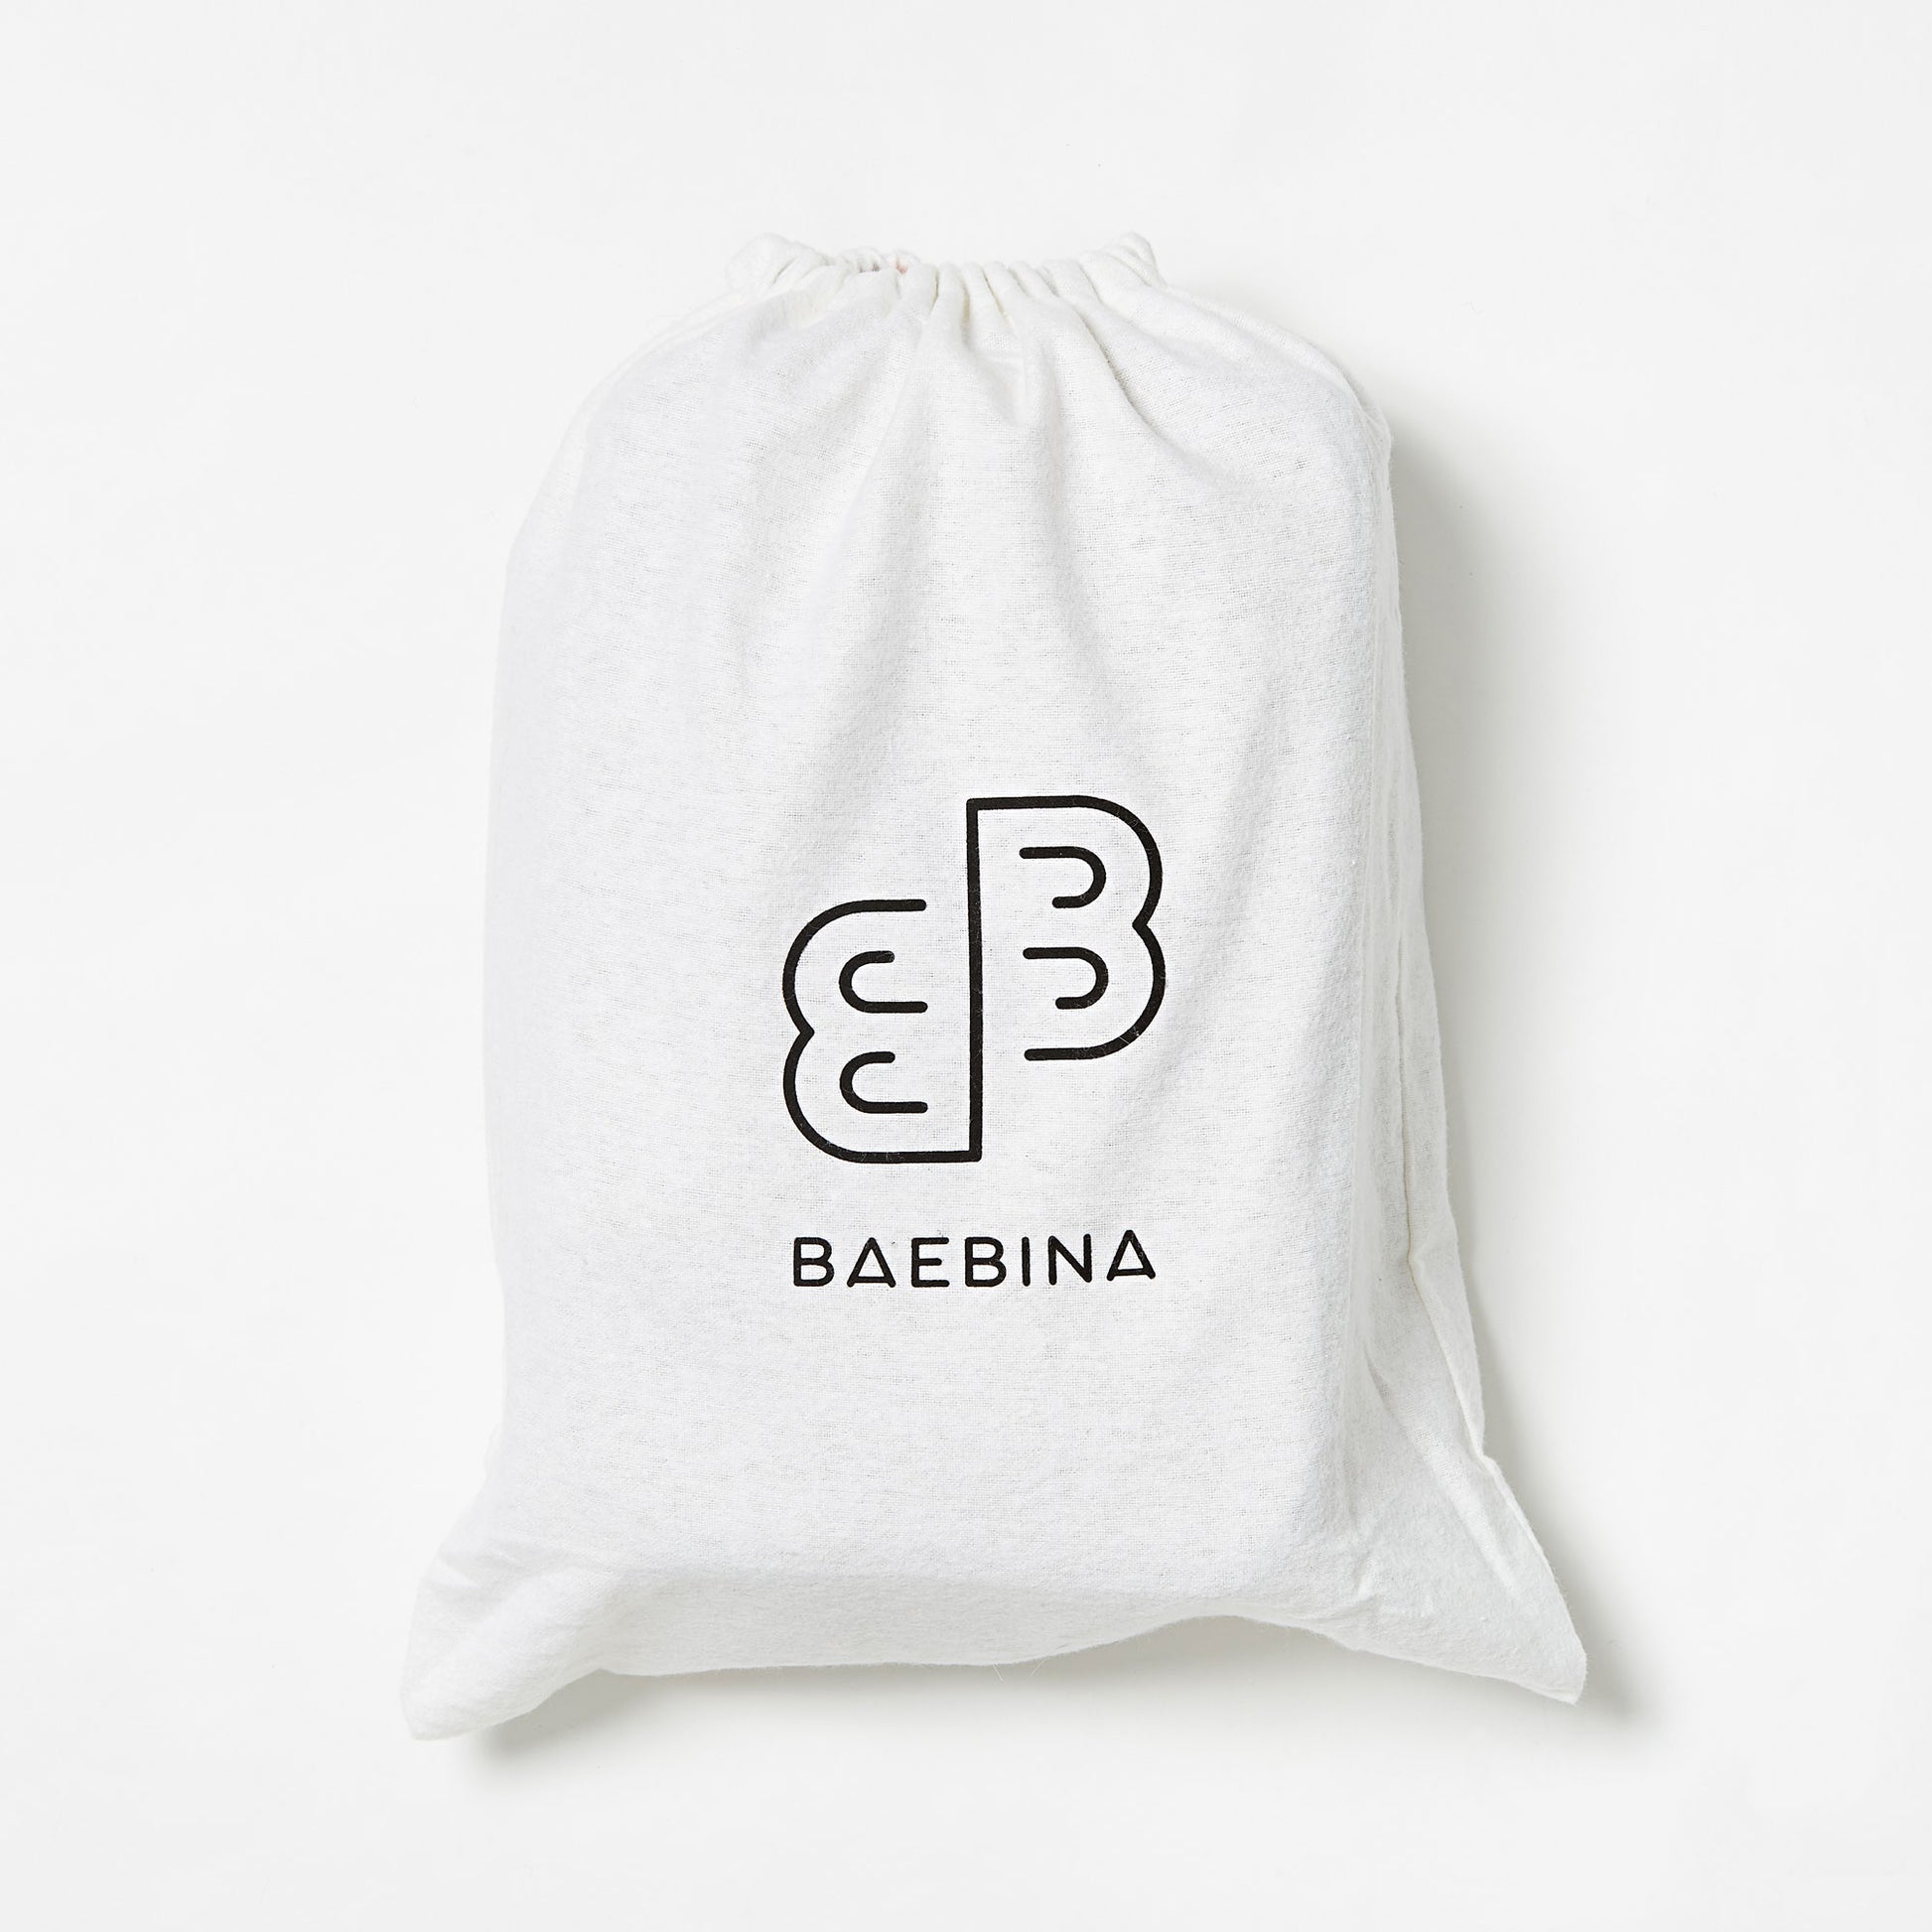 Baebina compact baby bag in dustbag